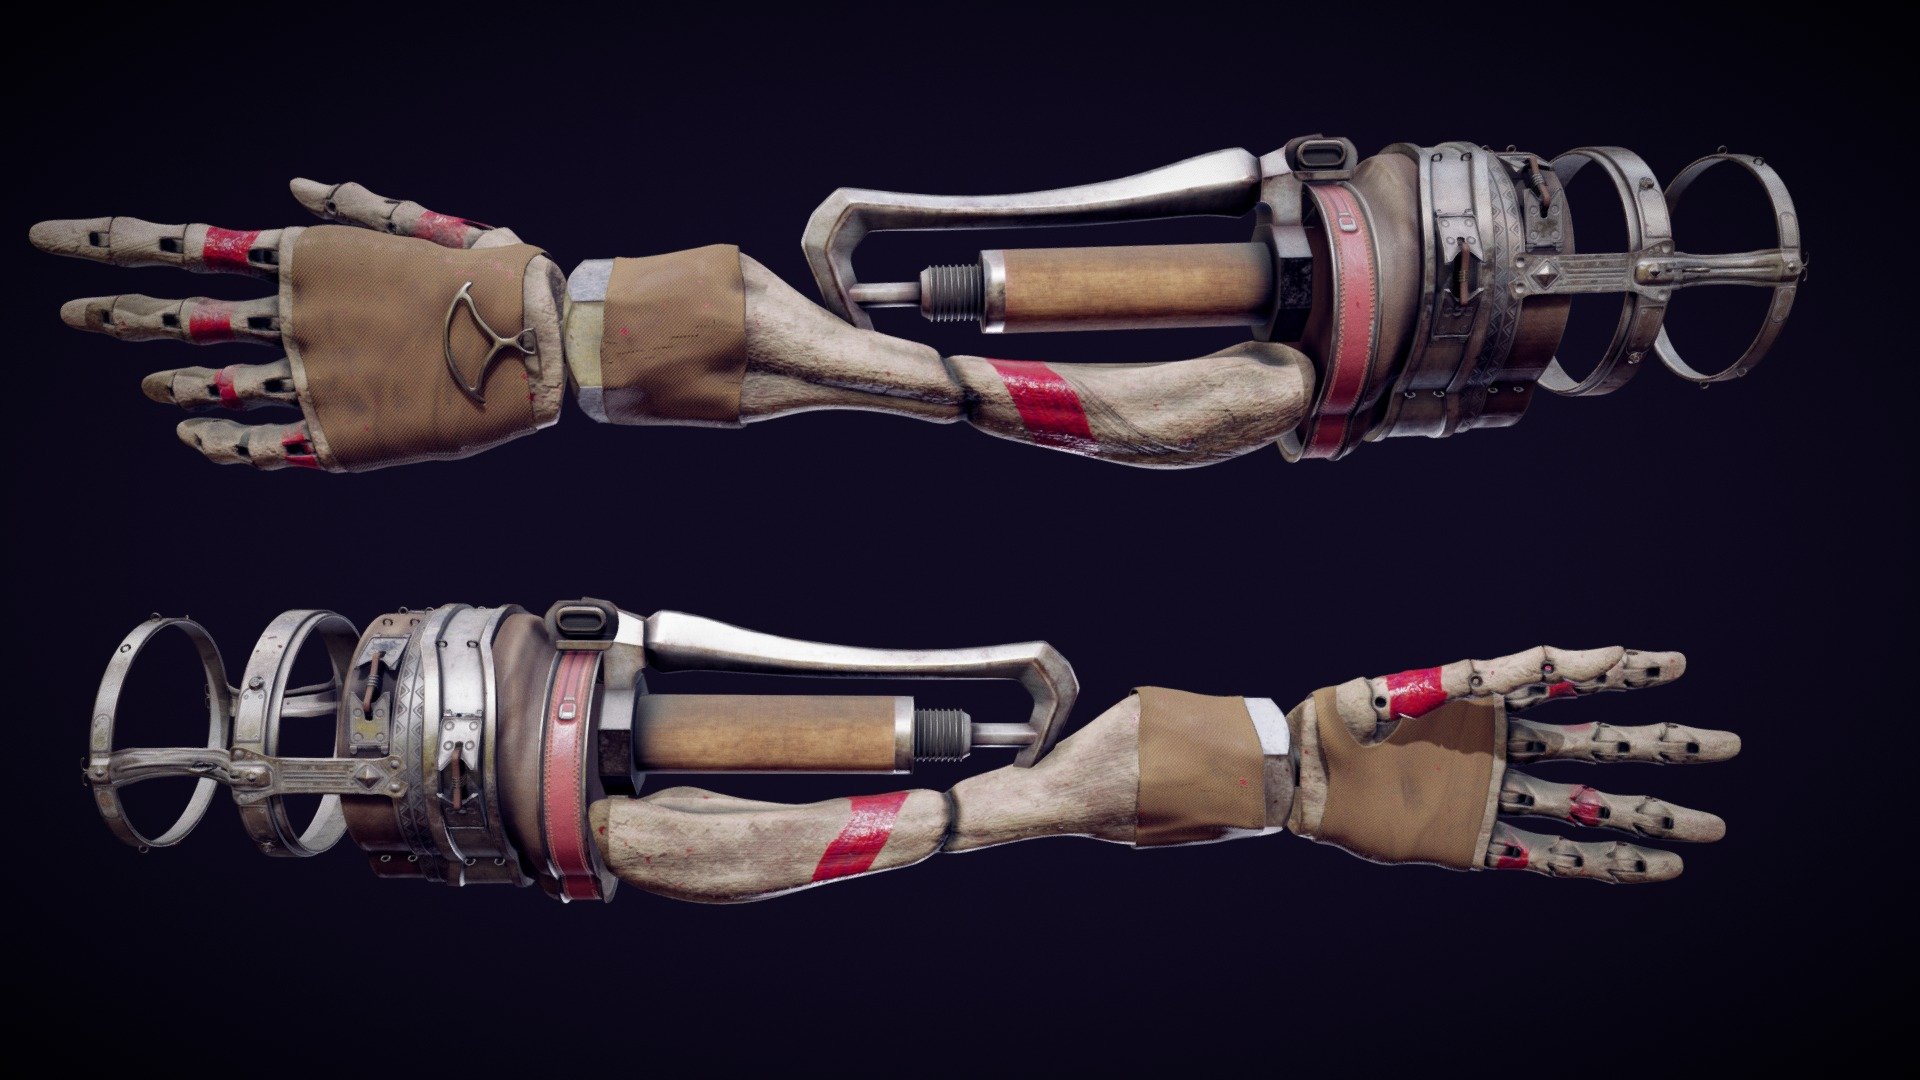 combat-prosthetic-arm-download-free-3d-model-by-npc-npcxbot